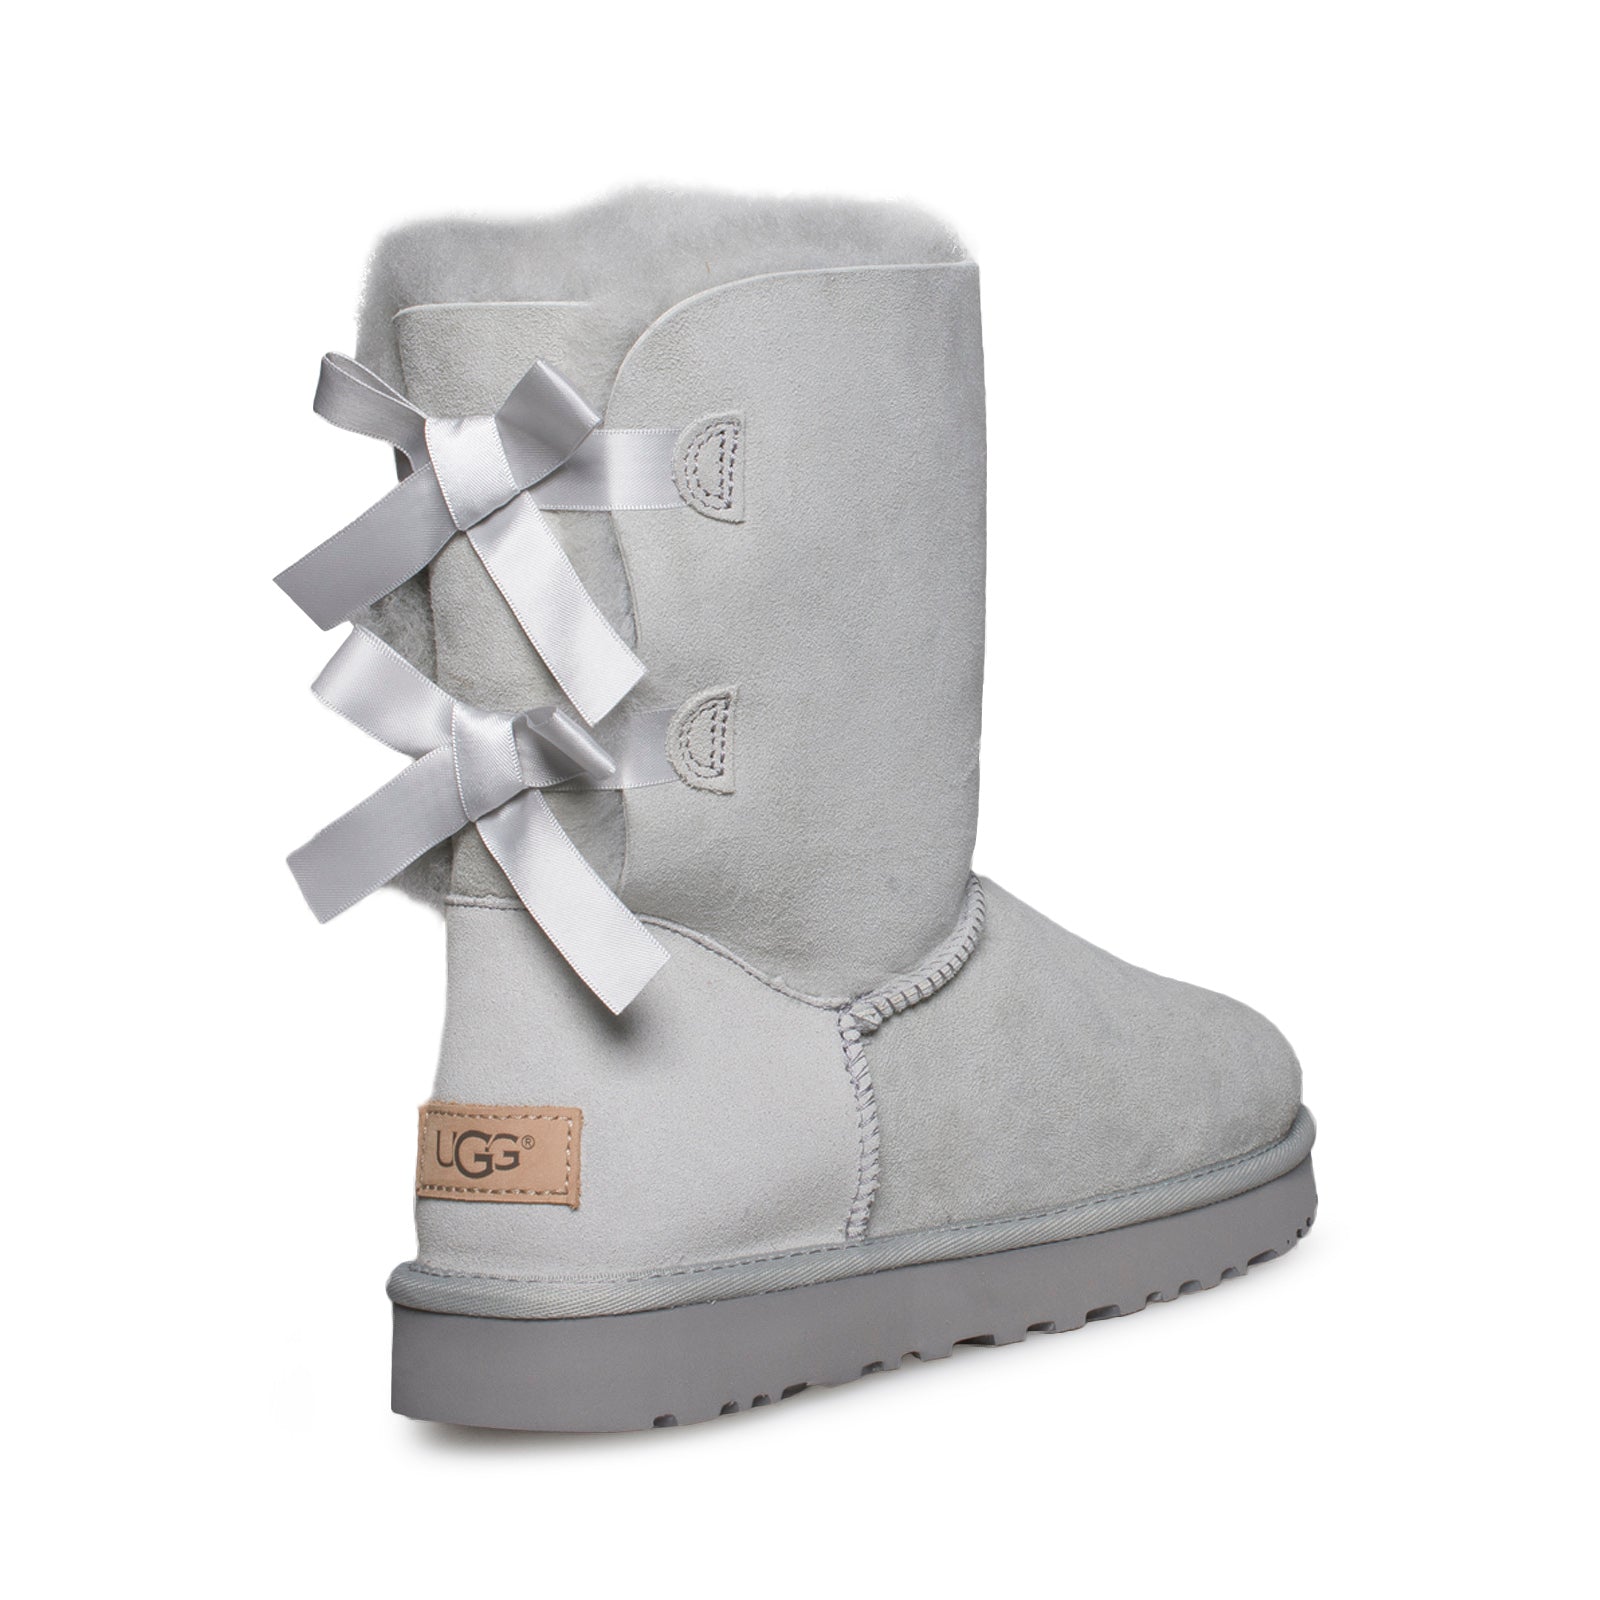 light grey ugg boots